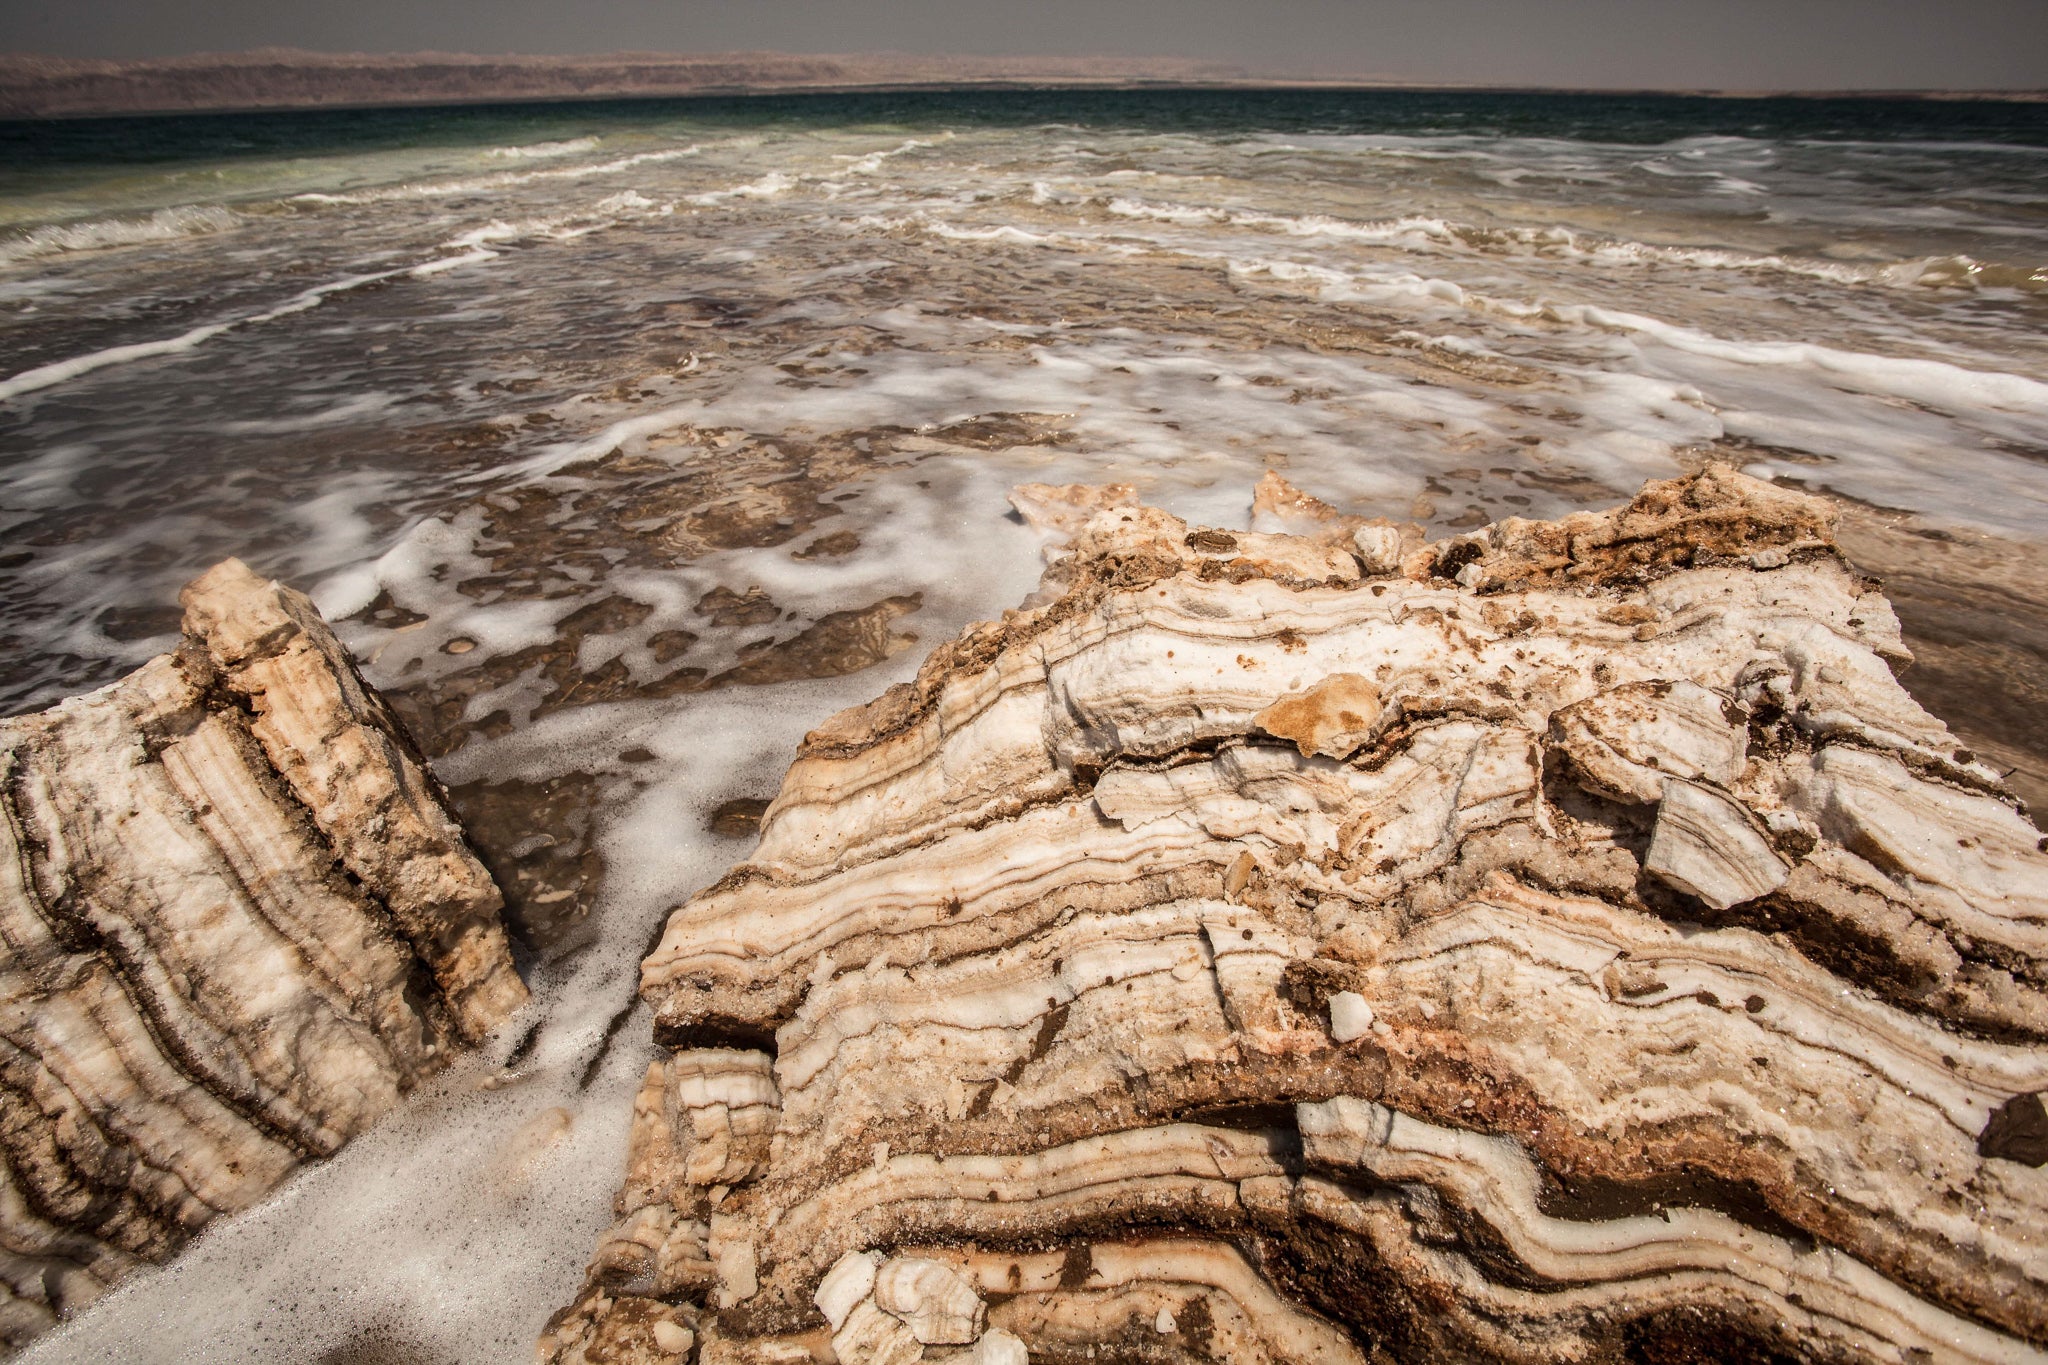 'The Dead Sea In-Between' by Ayesha Parikh